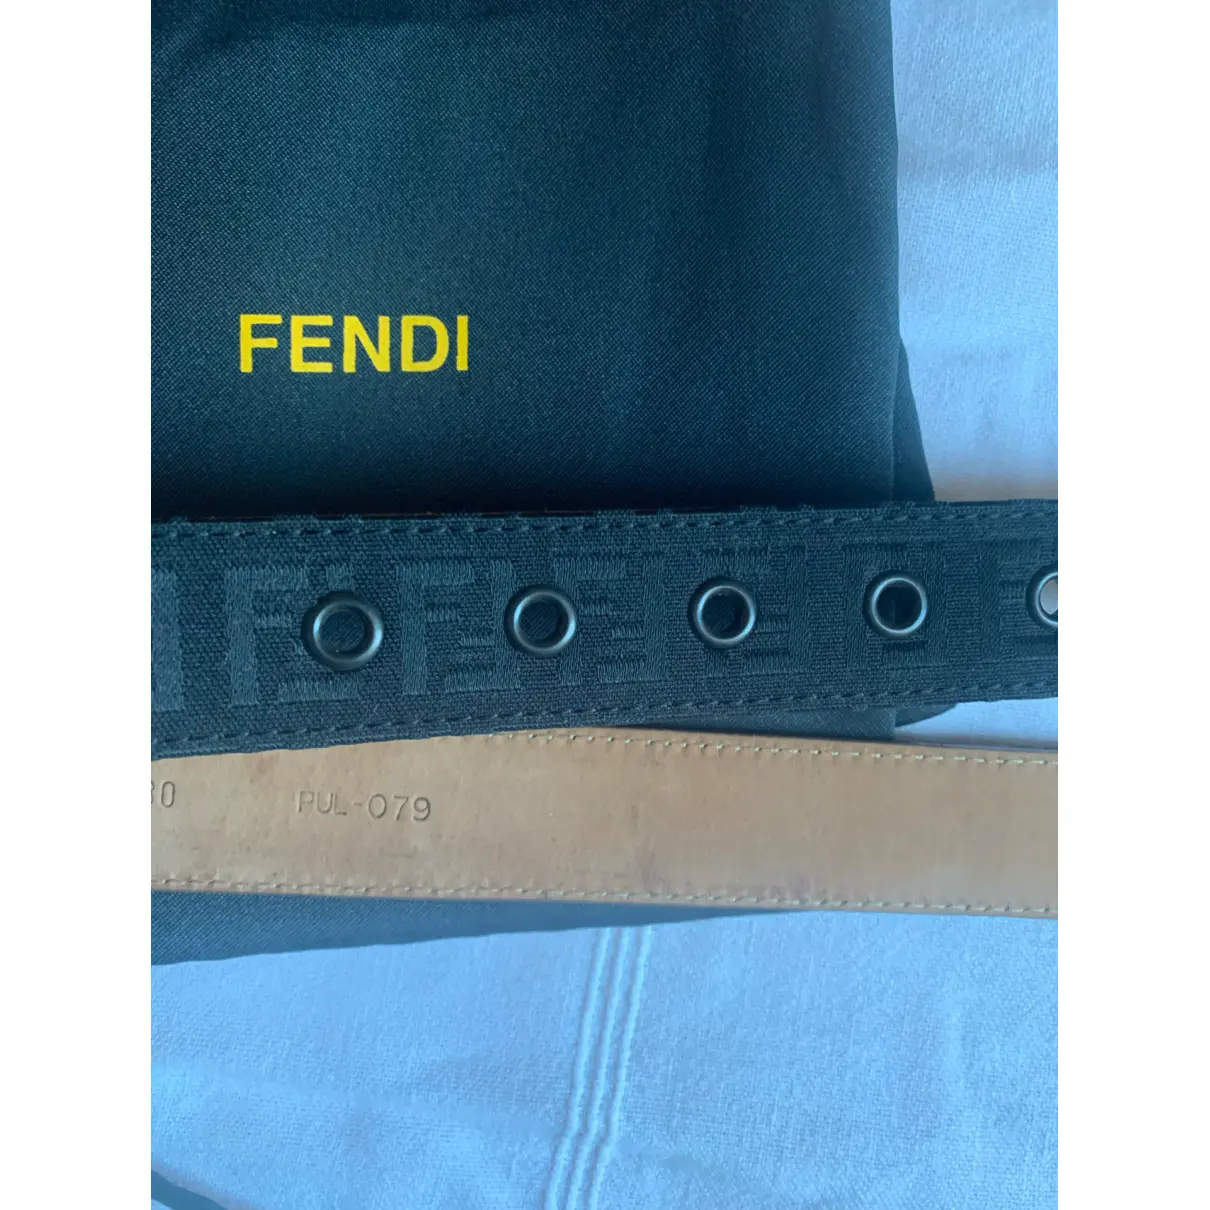 Buy Fendi Cloth belt online